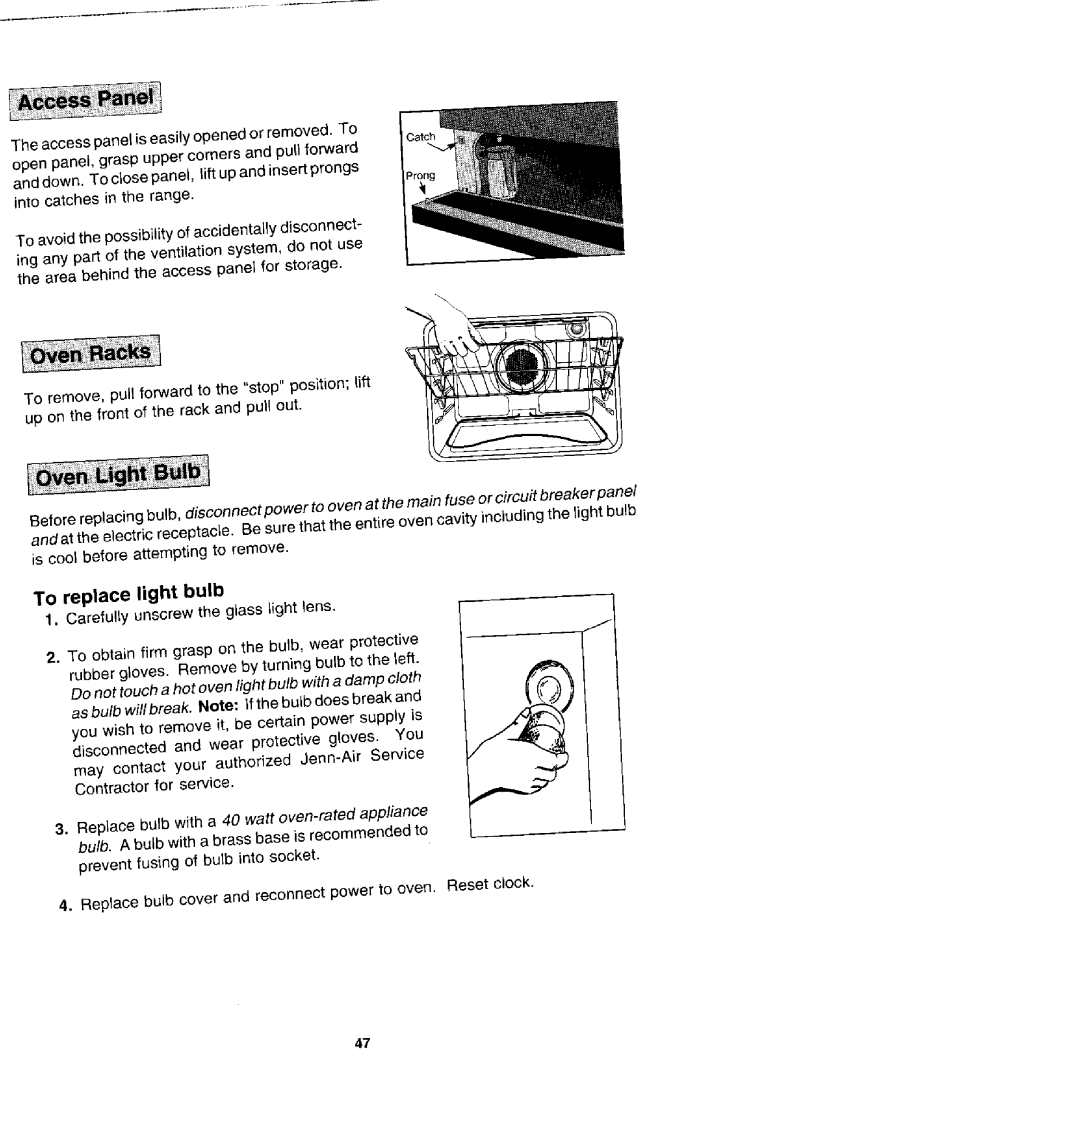 Jenn-Air SDV48600P manual To replaceightbulb 